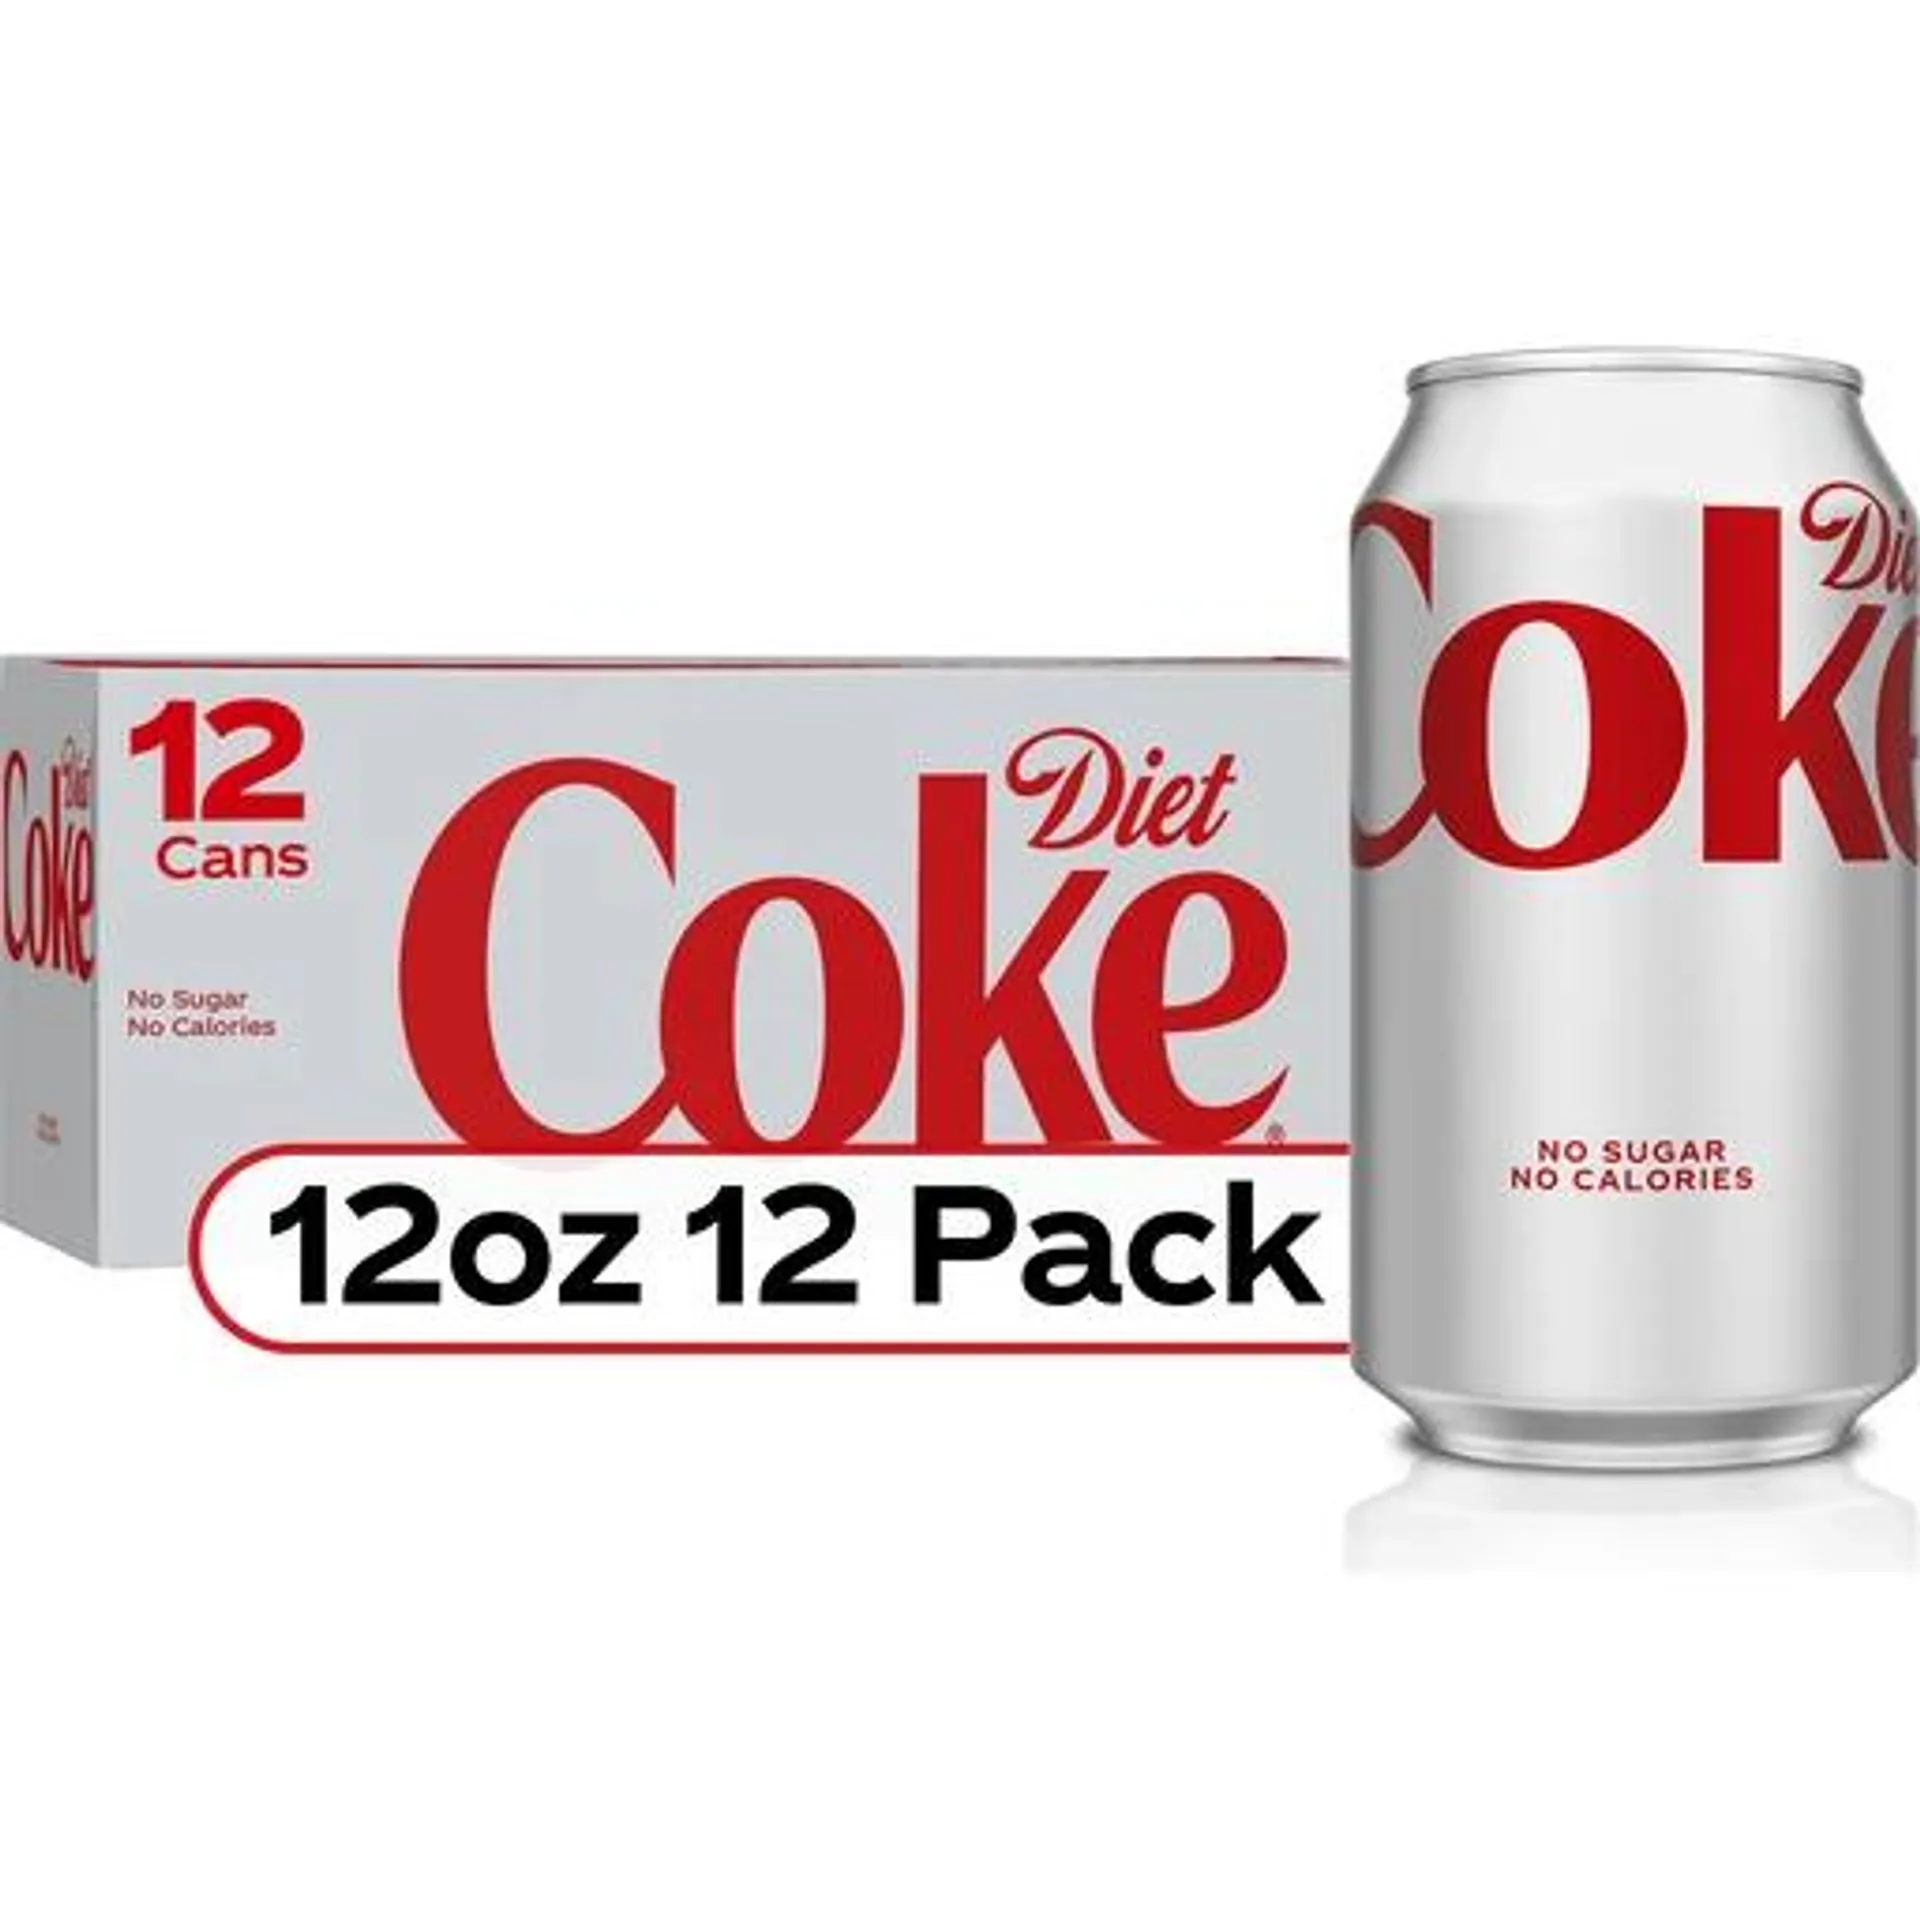 Coca Cola Diet Coke Soda 12 fl oz can 12 pack